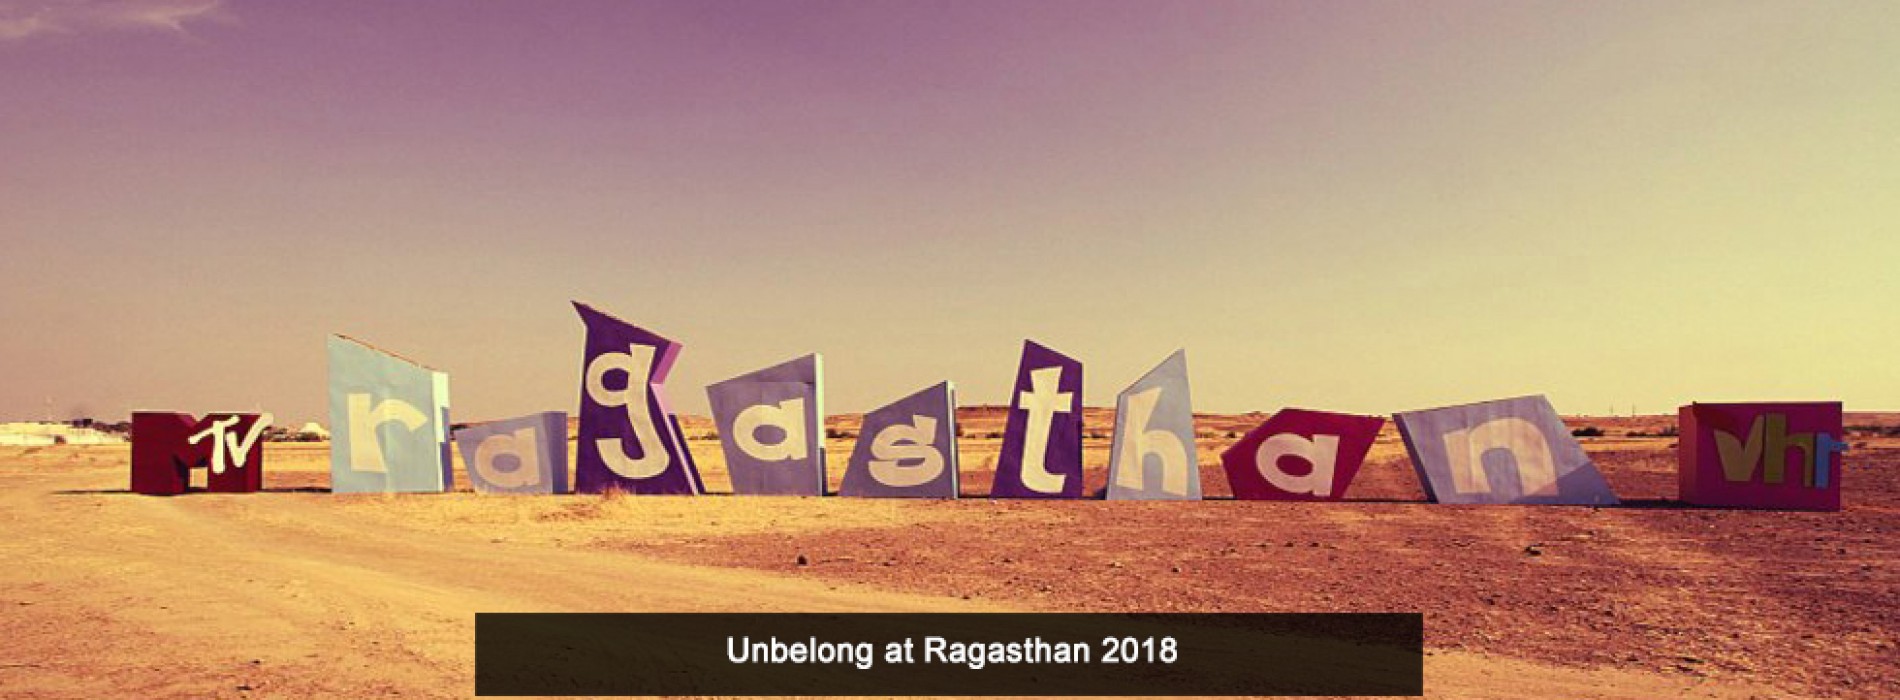 Ragasthan, Where You Unbelong